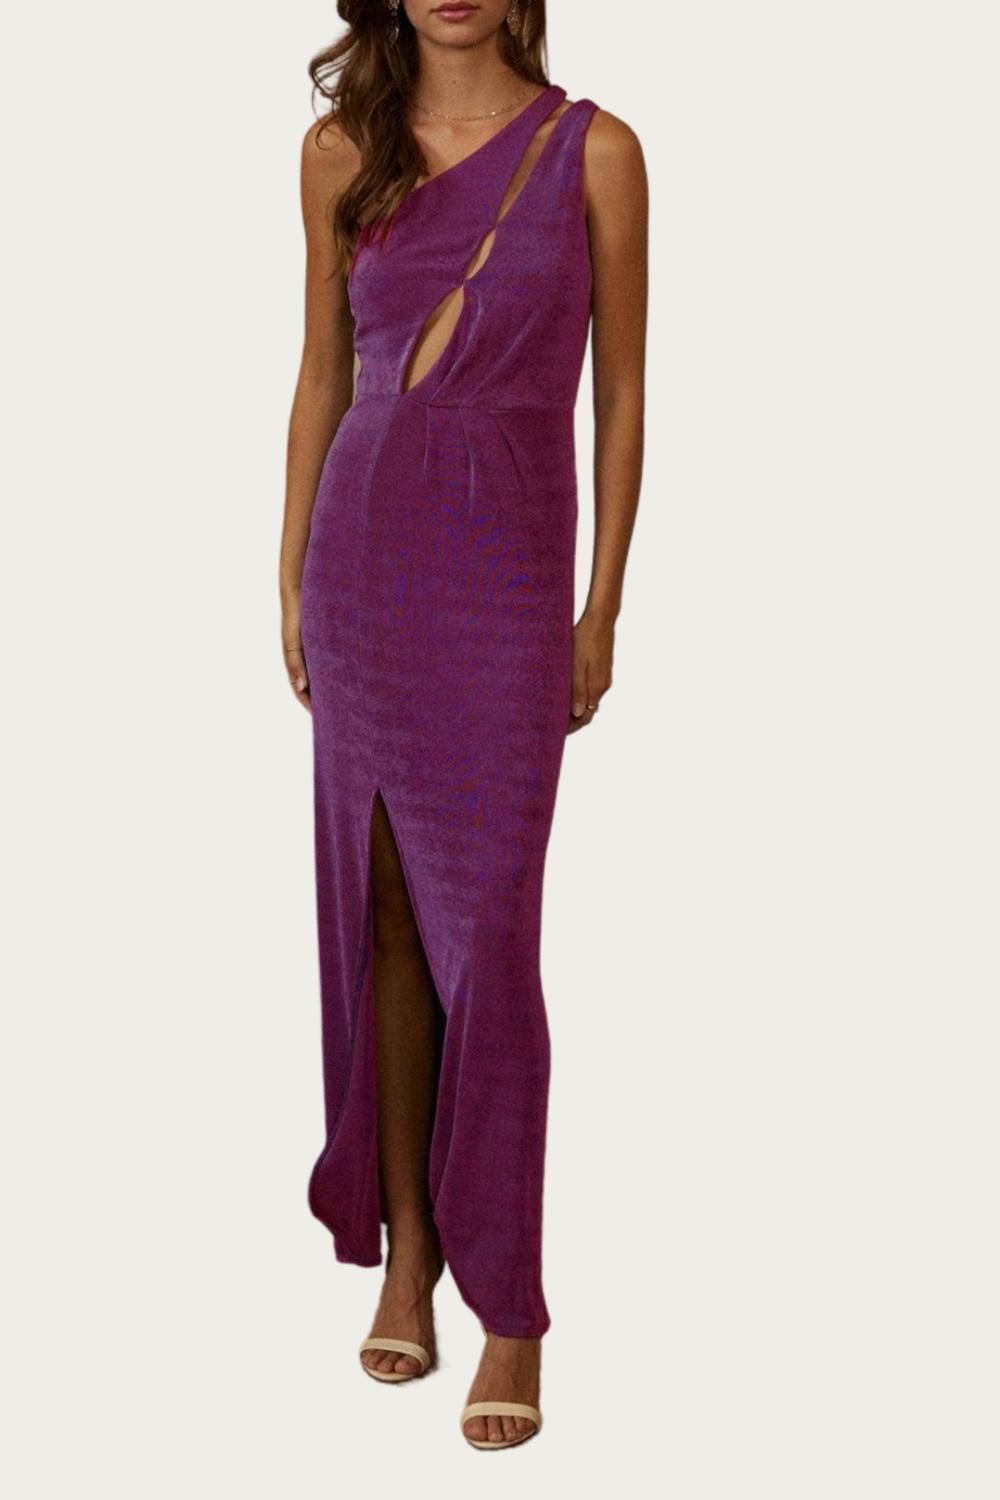 Style 1-387833105-2696 ENDLESS BLU. Size L One Shoulder Purple Side Slit Dress on Queenly